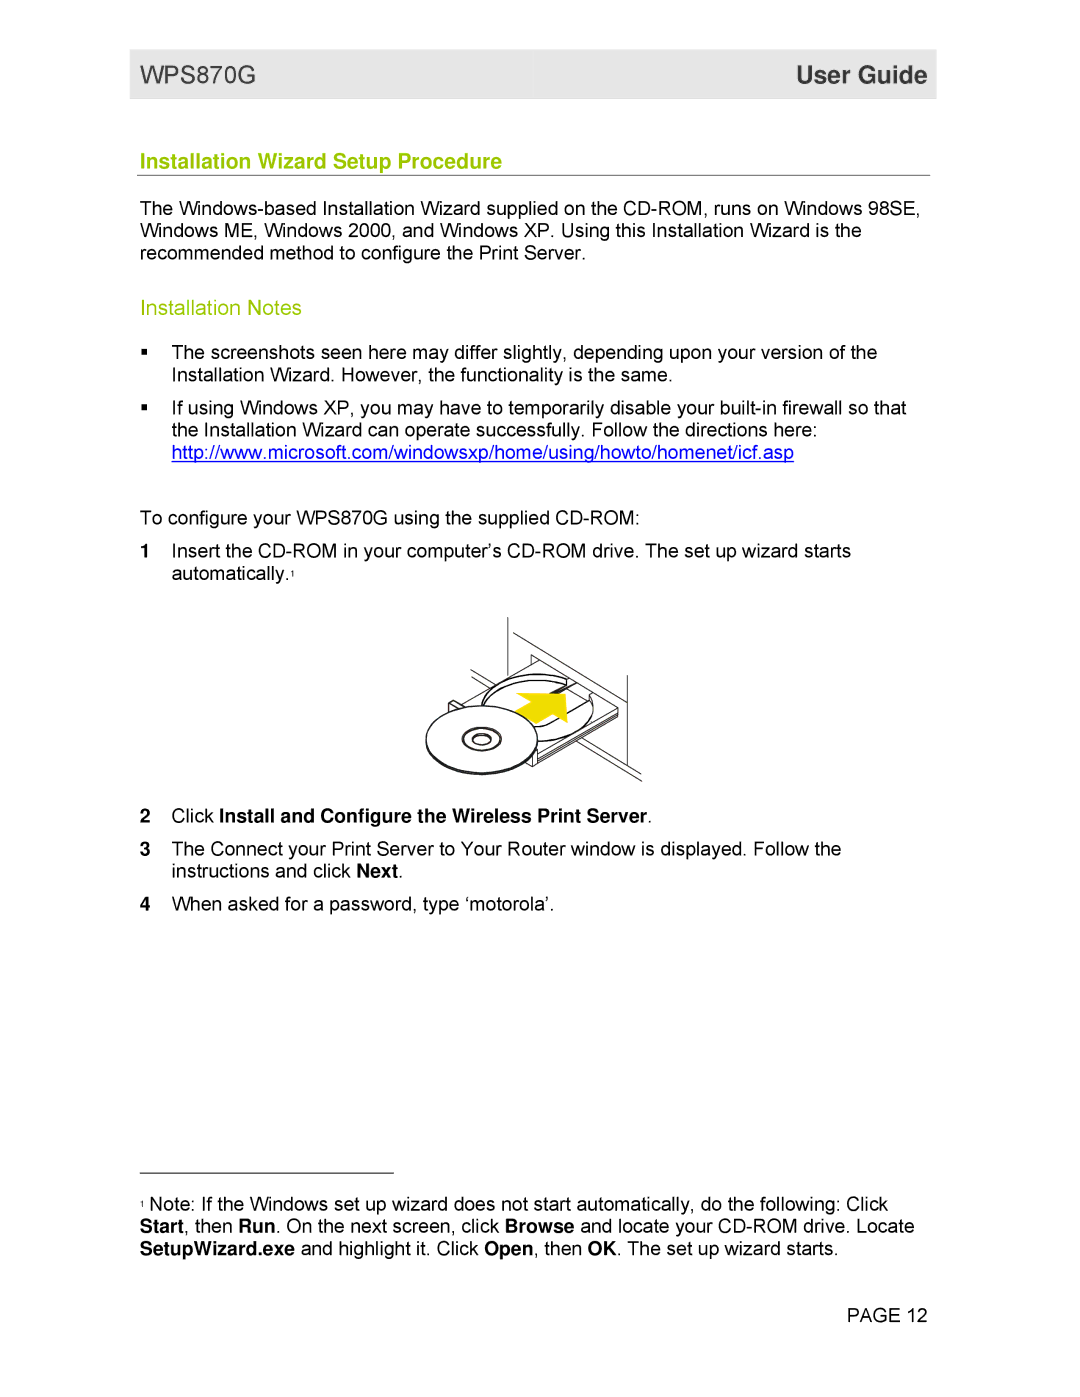 Motorola WPS870G manual Installation Wizard Setup Procedure, Installation Notes 